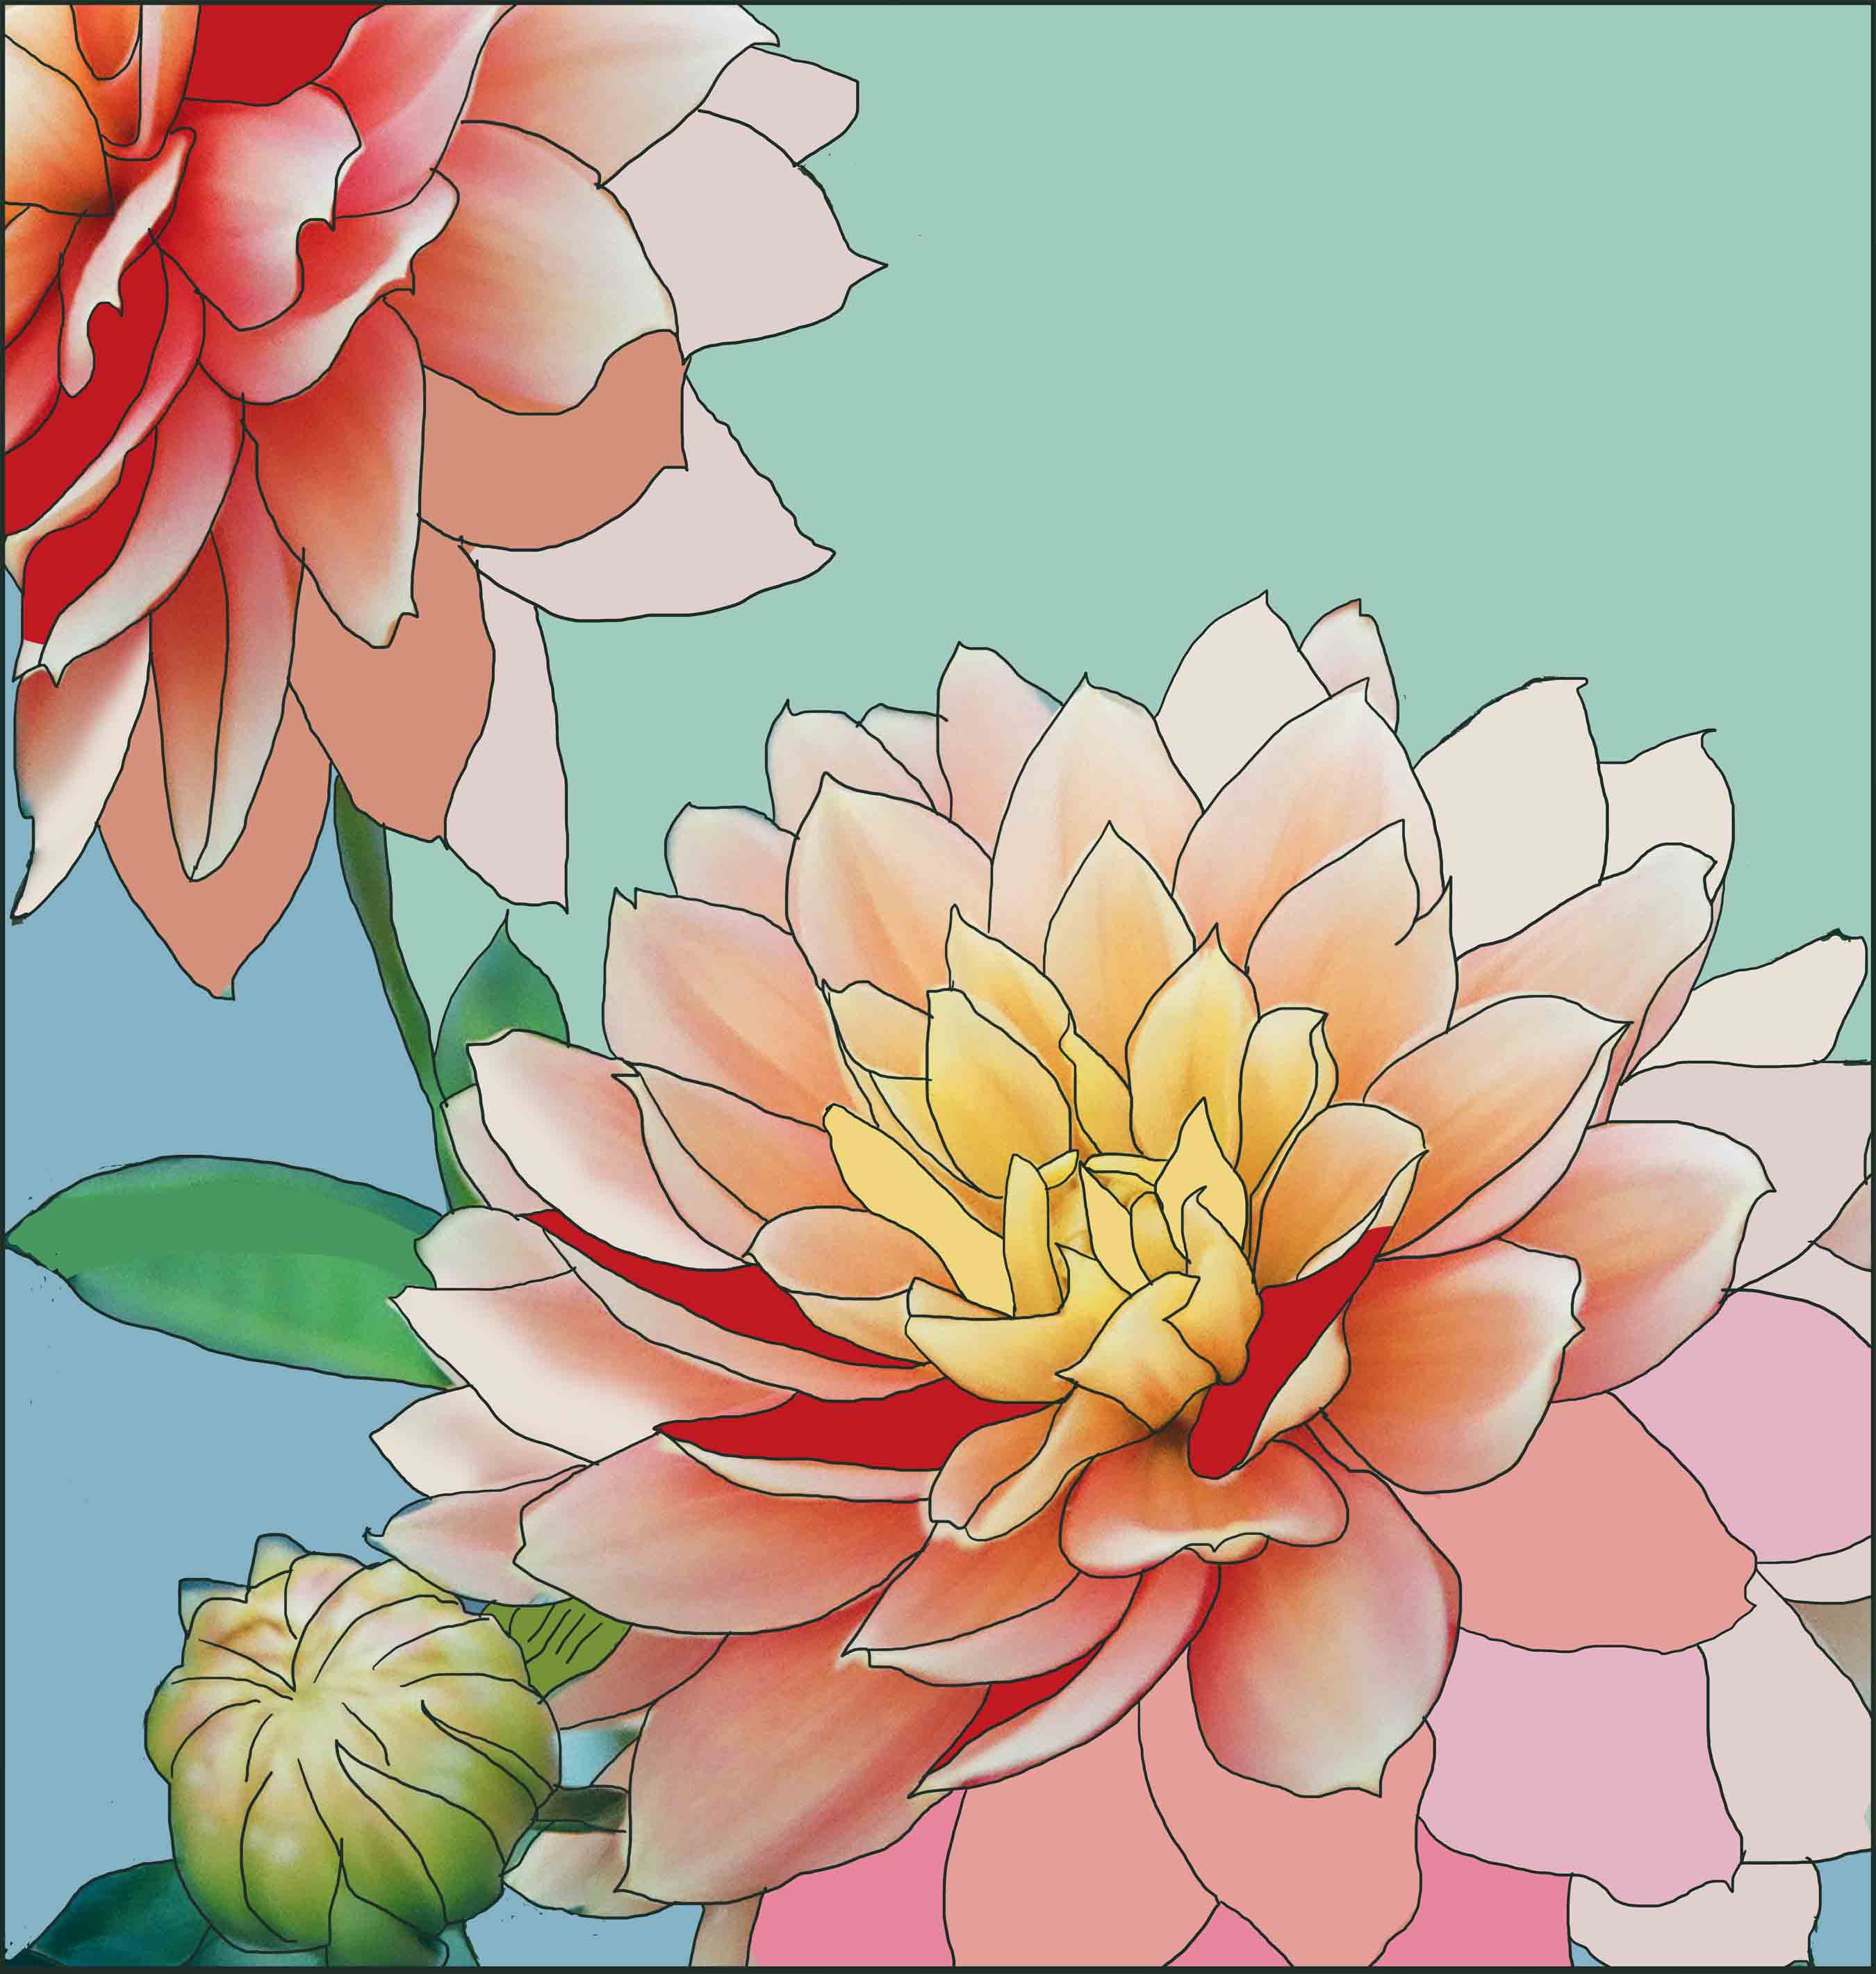 ART EVERY DAY NUMBER 578 / PHOTO & ILLUSTRATION / FLOWERS FOR WINTER Art Every Day Number 578 / Flowers for Winter Art & Illustration / Janet Bright